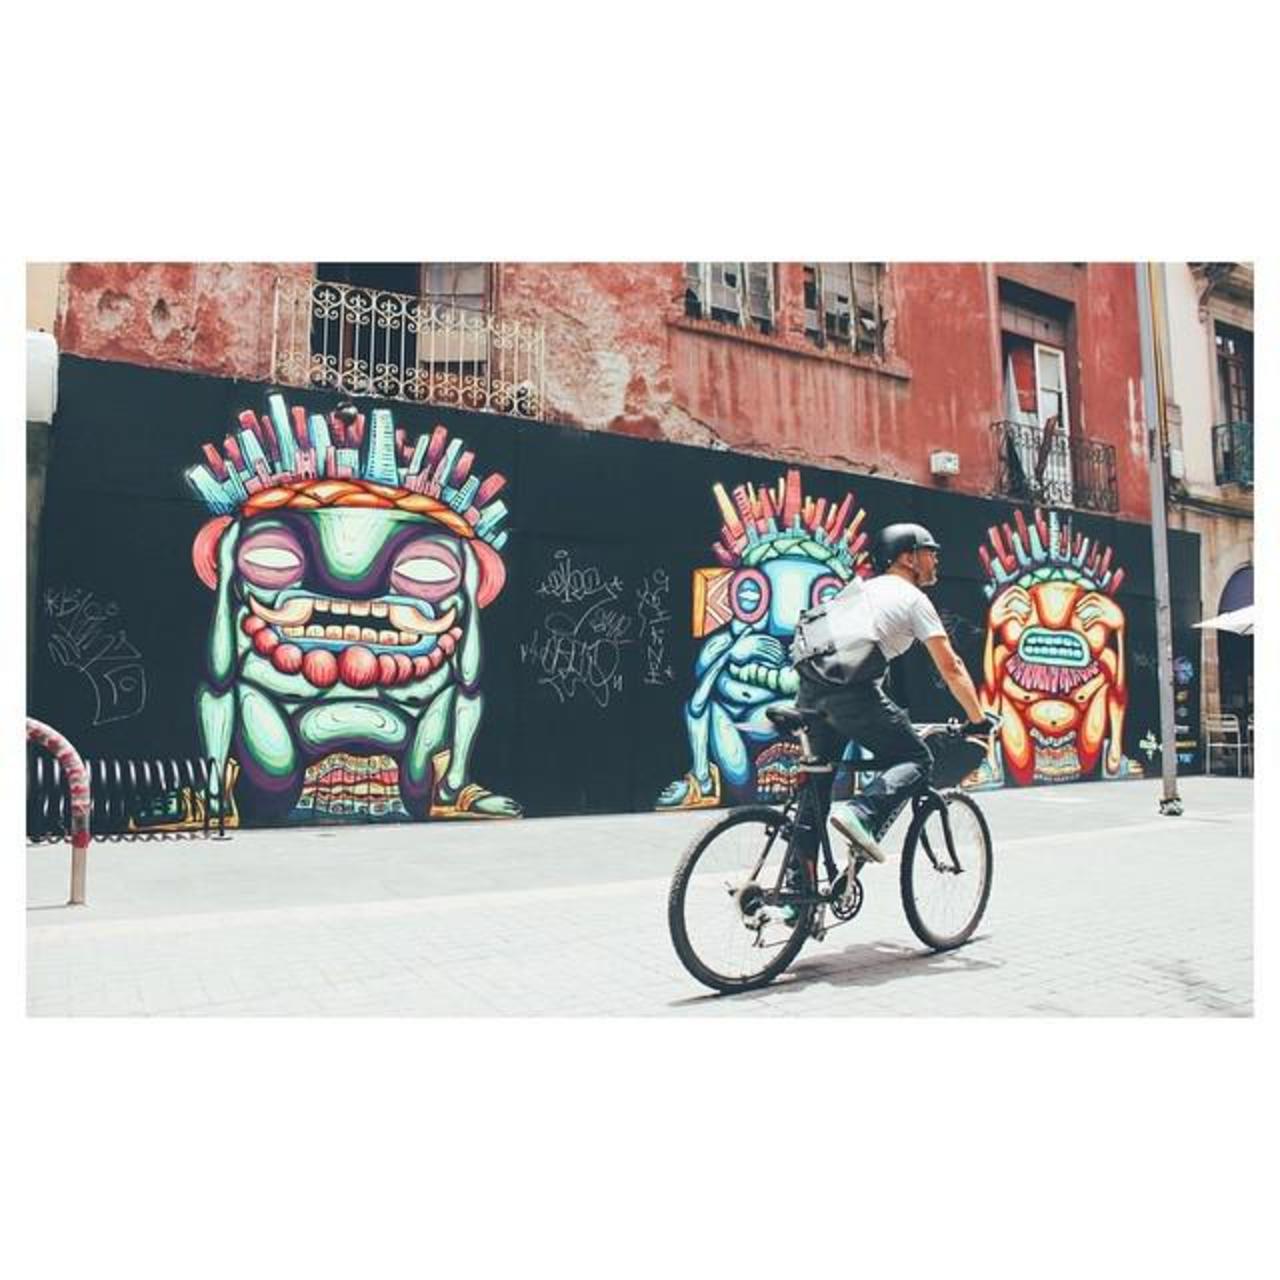 Gods on the wall | # #Ocote #Urban #UrbanArt #StreetArt #Art #Mural #Graffiti #Spray #StreetArtChilango #StreetAr… http://t.co/8RnmpPBQ4K